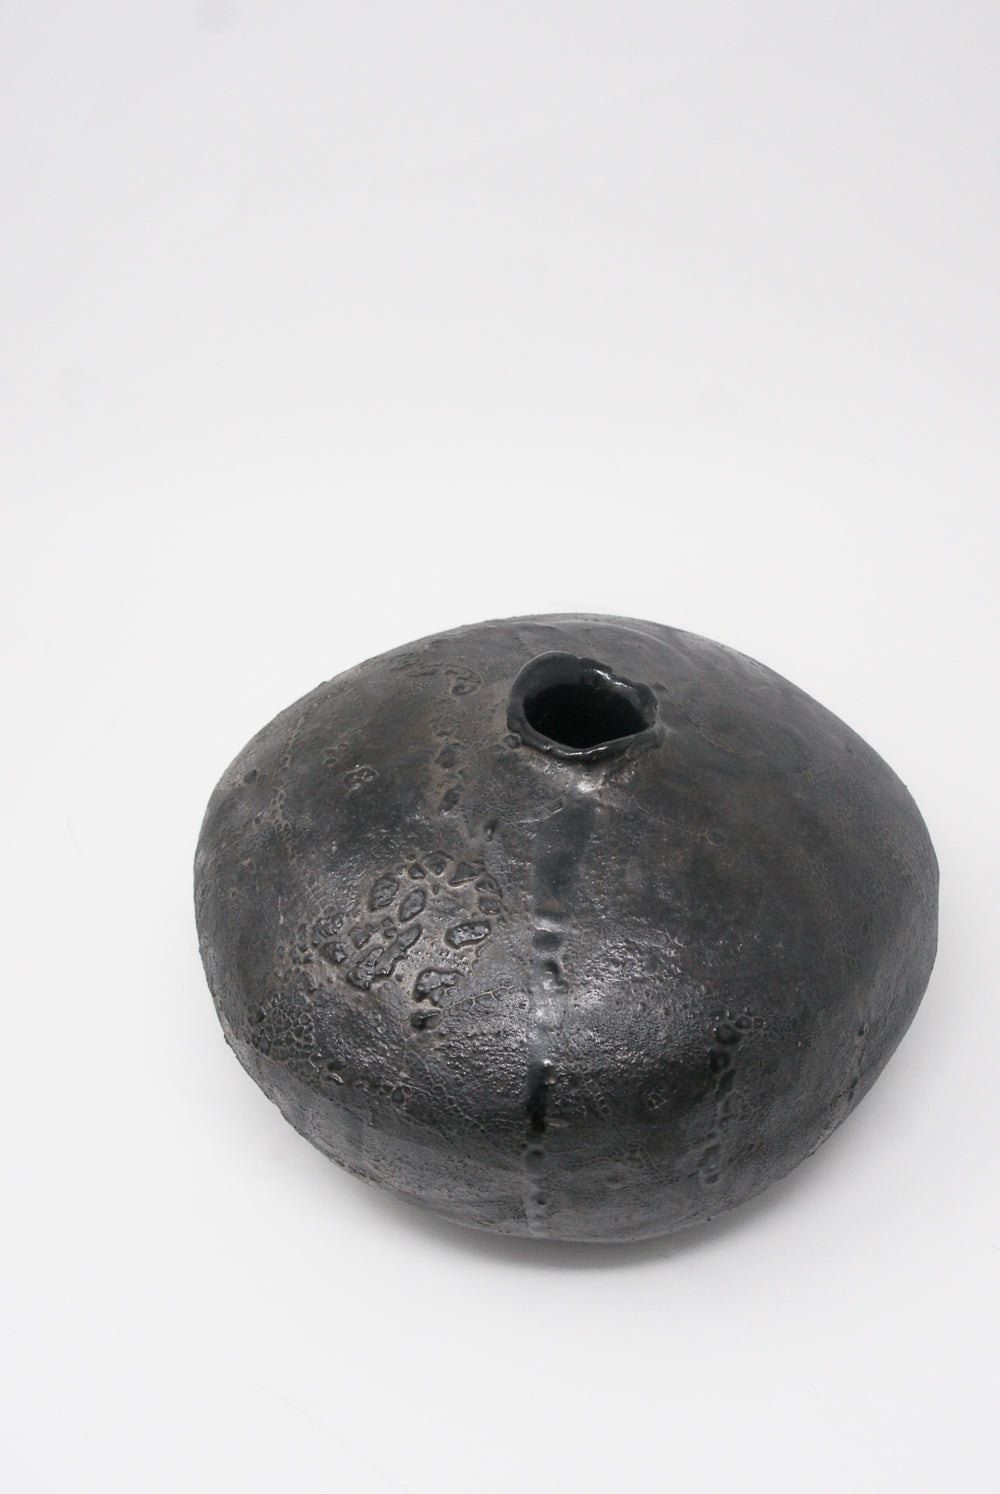 MONDAYS - New Moon Vase in Black Glaze on Stoneware mouth opening detail 